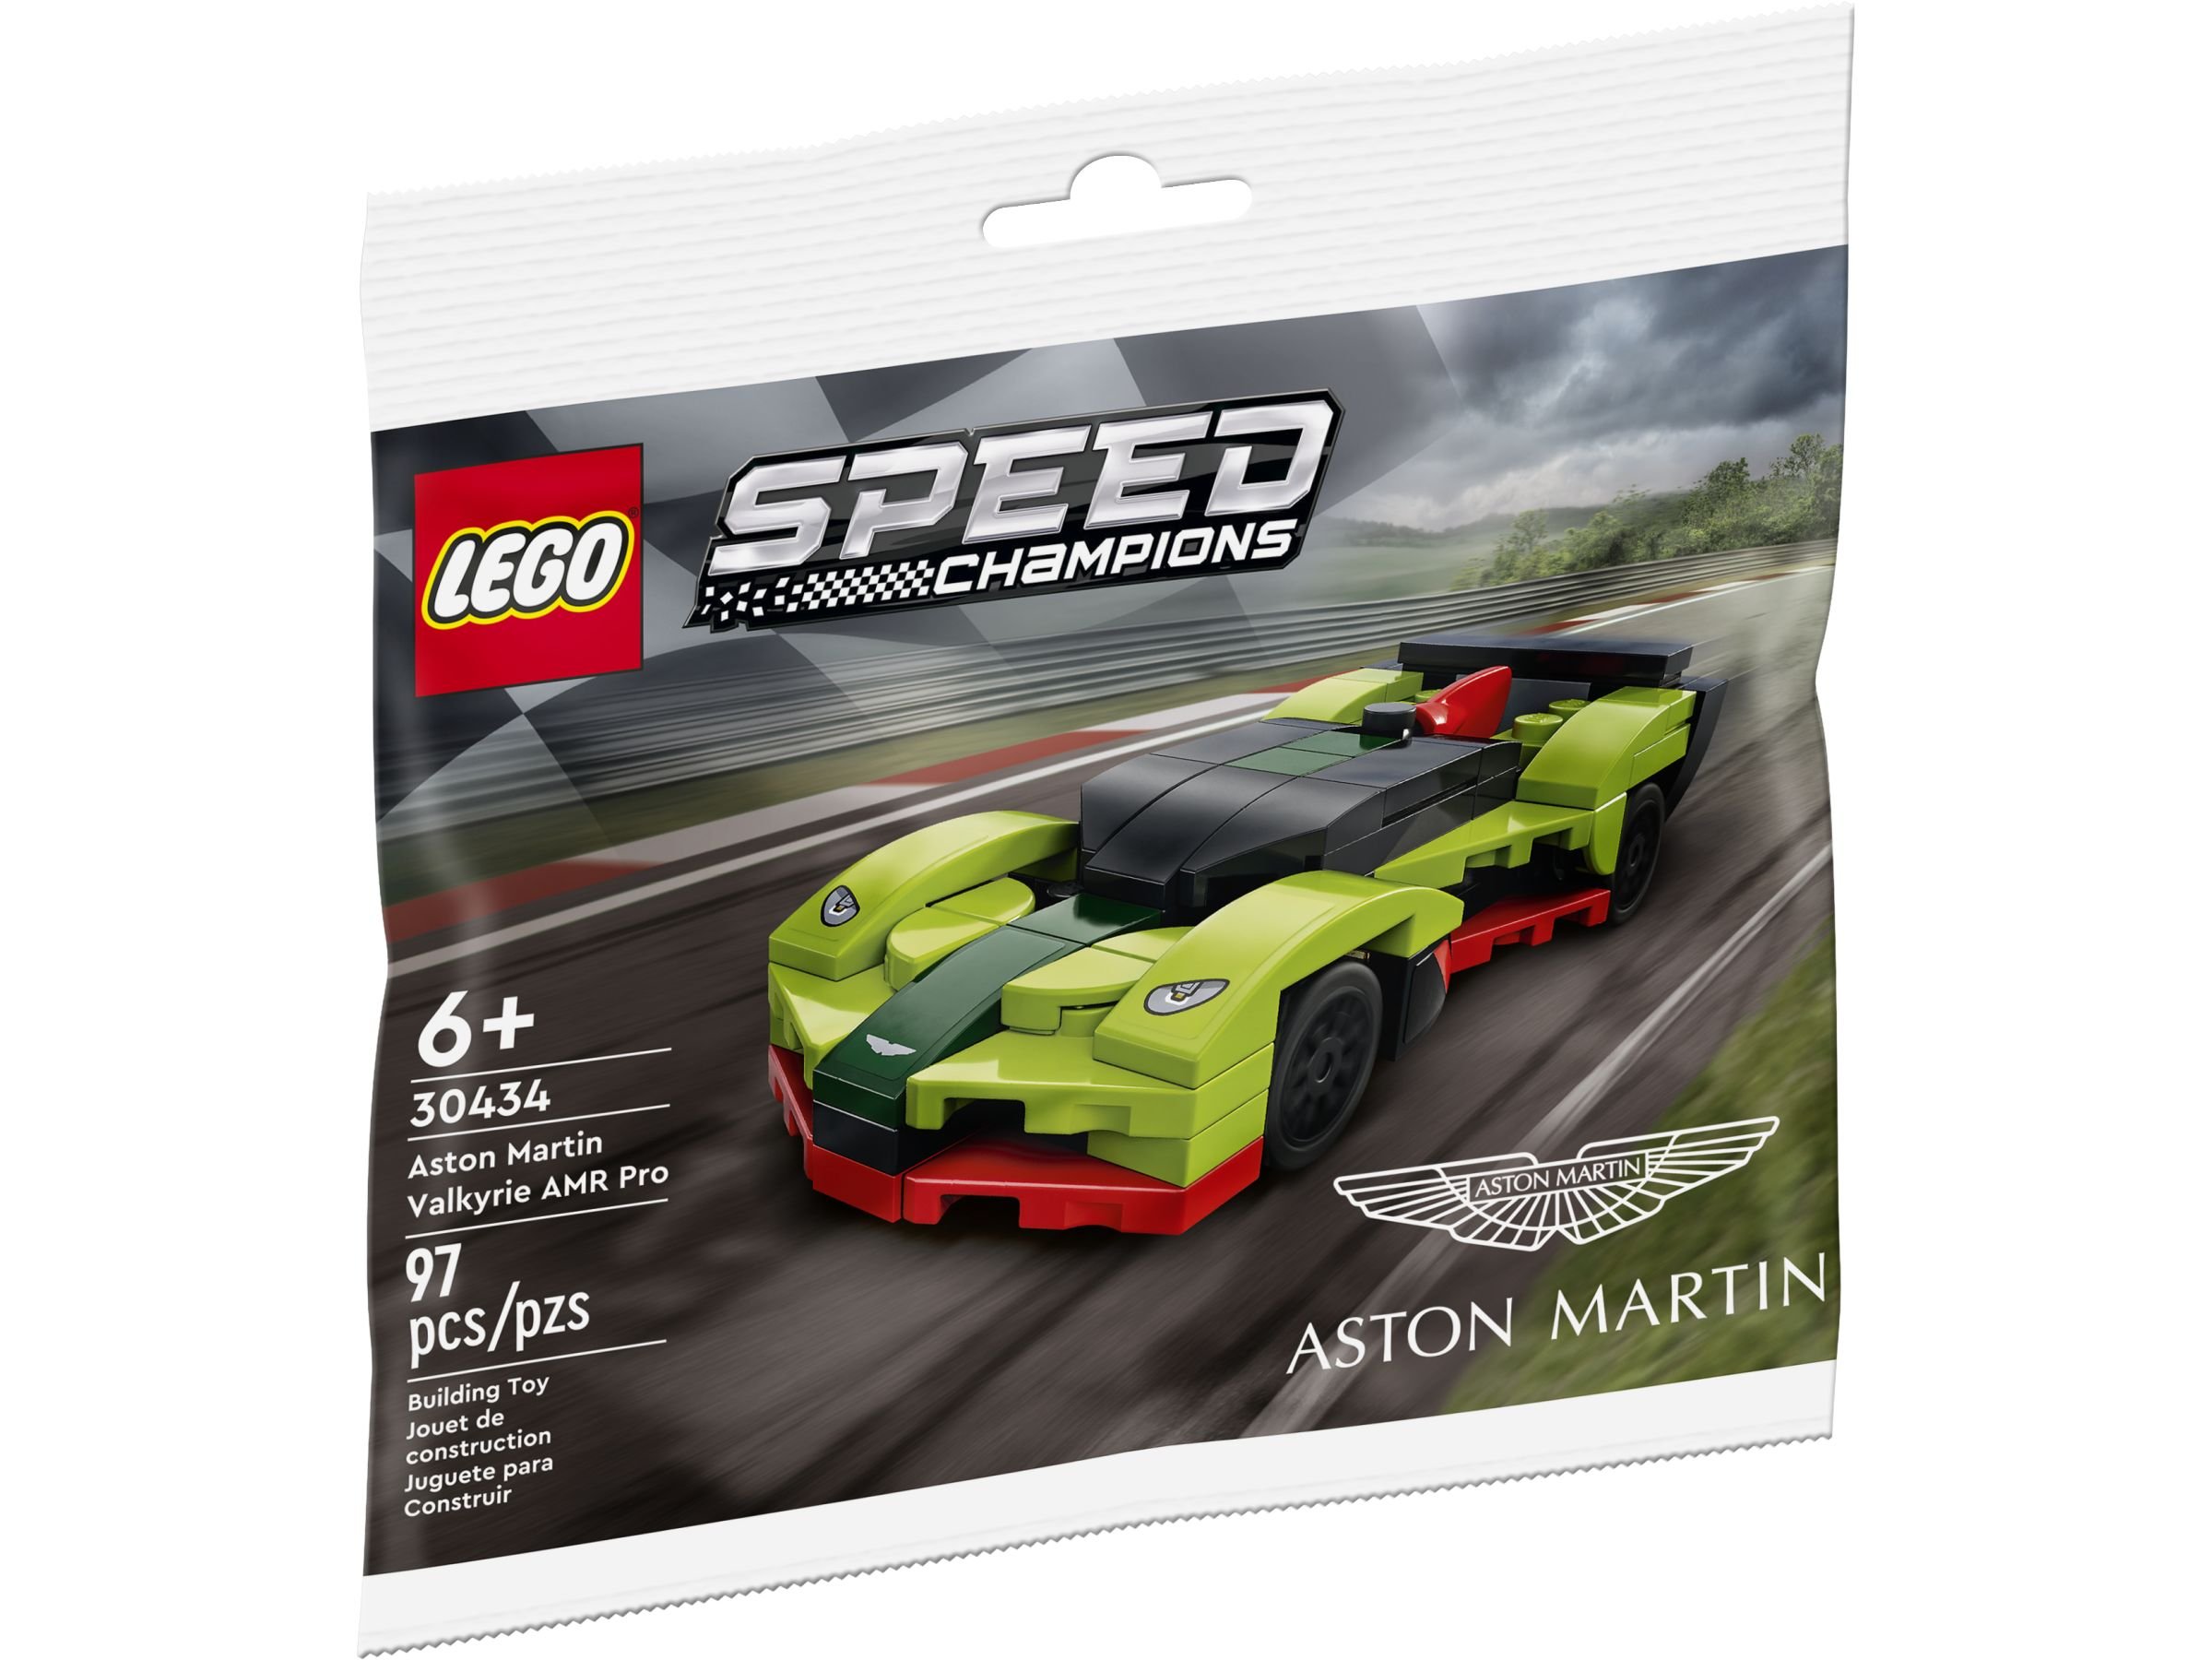 LEGO Creator 30434 Aston Martin Valkyrie AMR Pro LEGO_30434_alt1.jpg